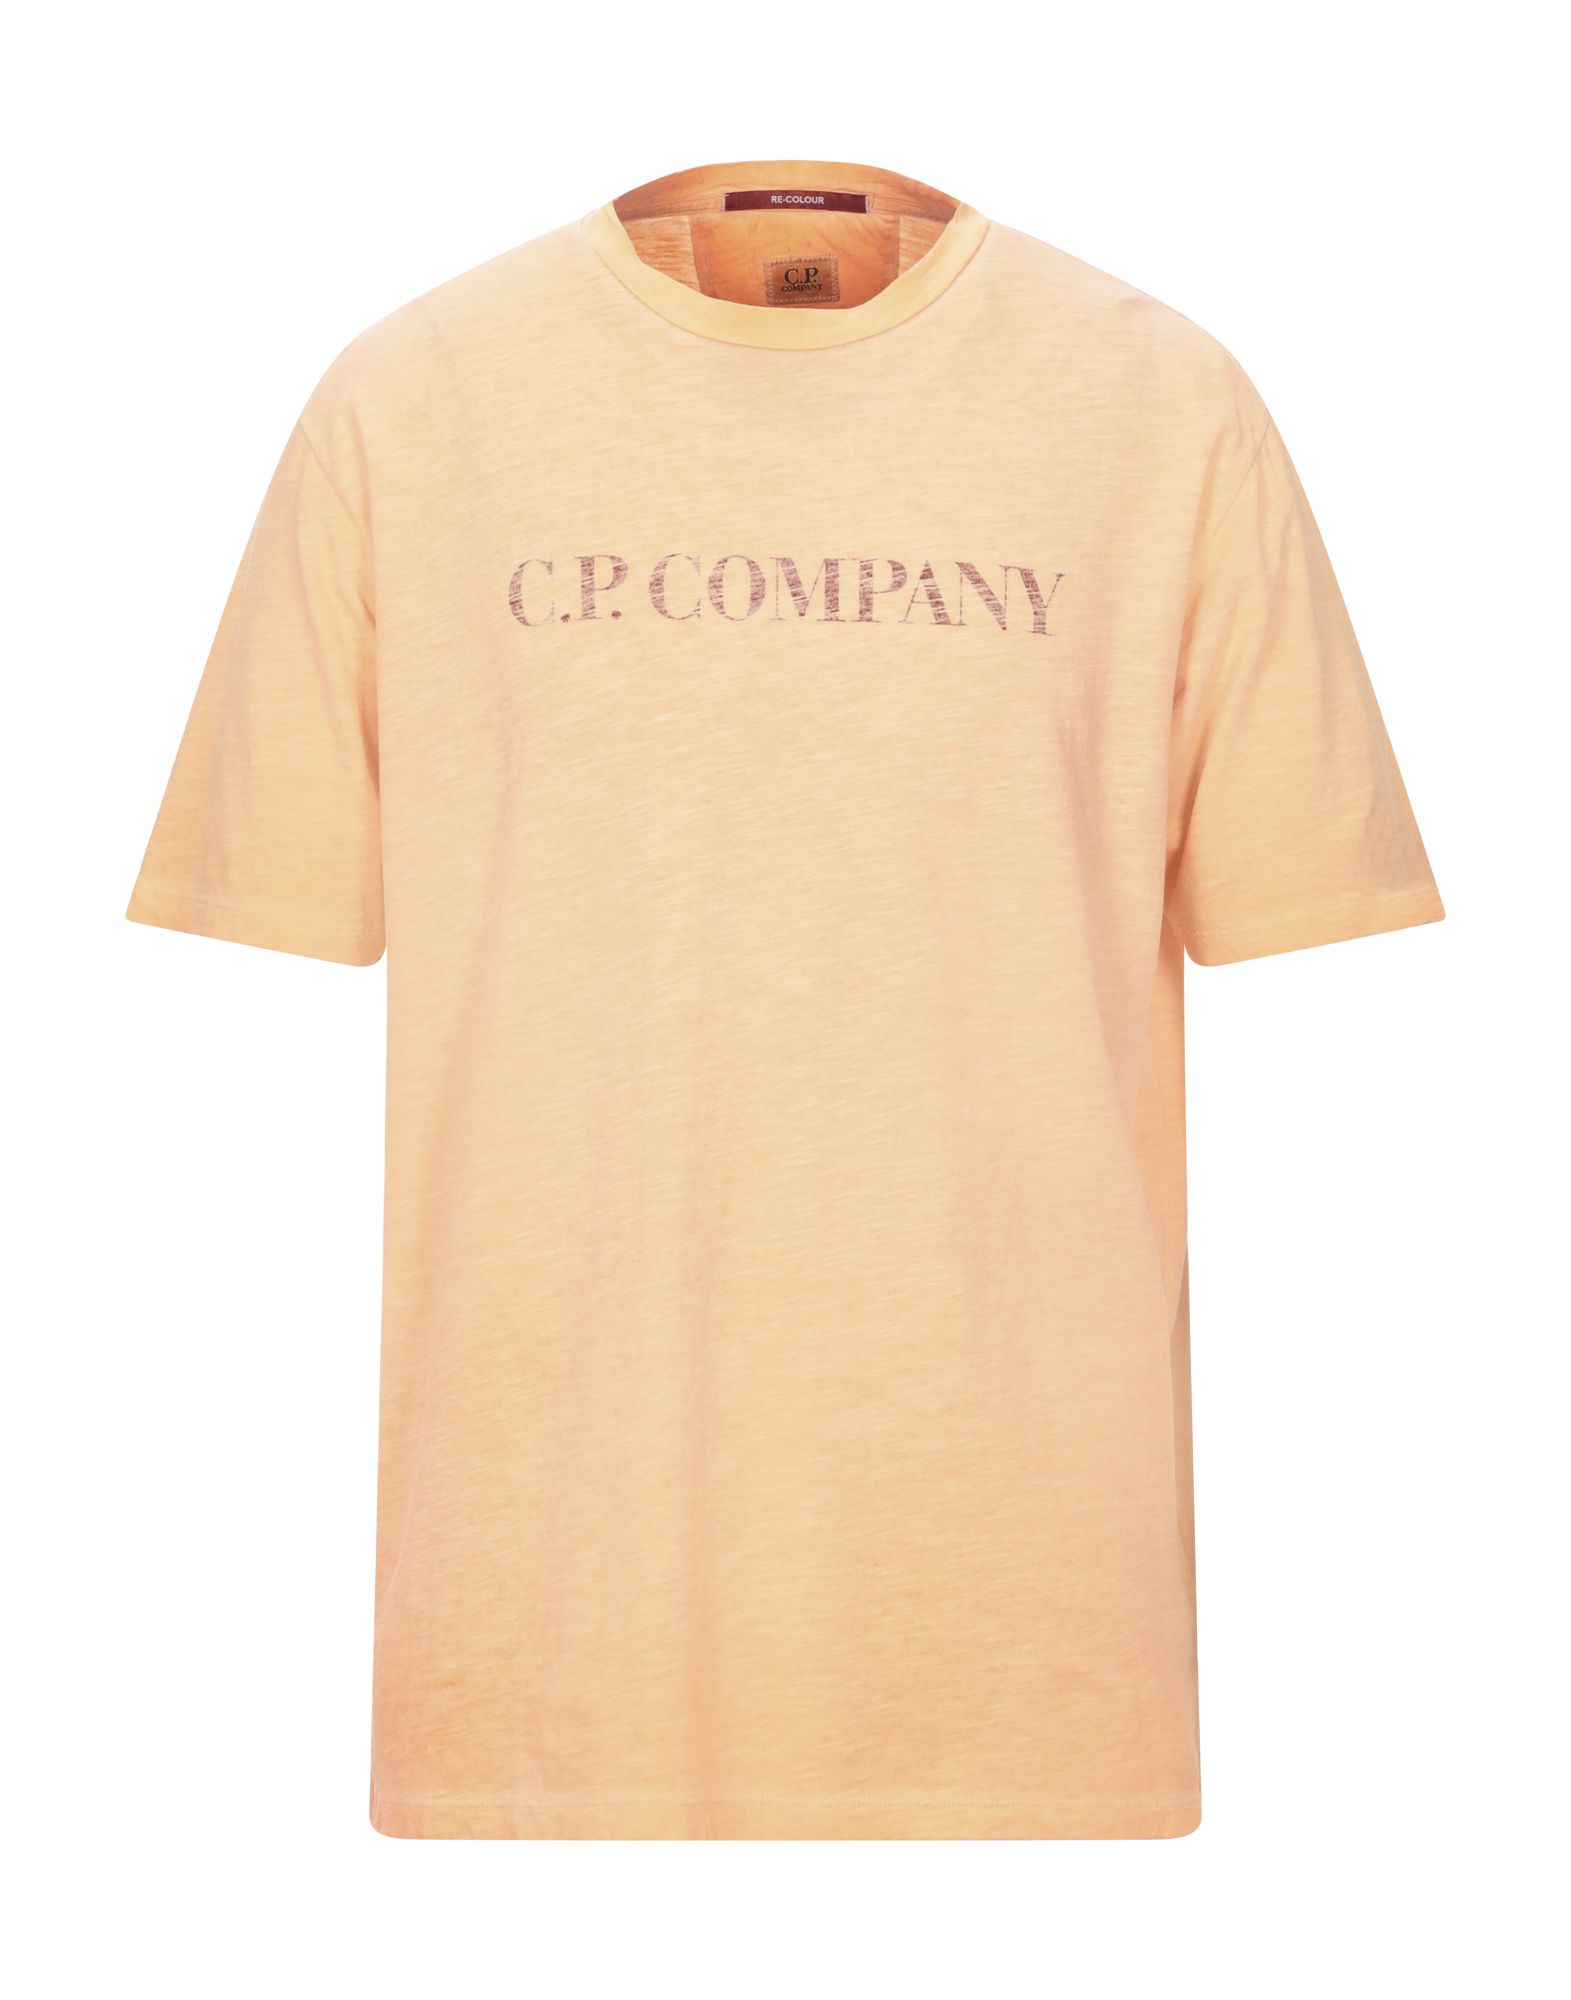 C.P. COMPANY T-shirts - Item 12509748